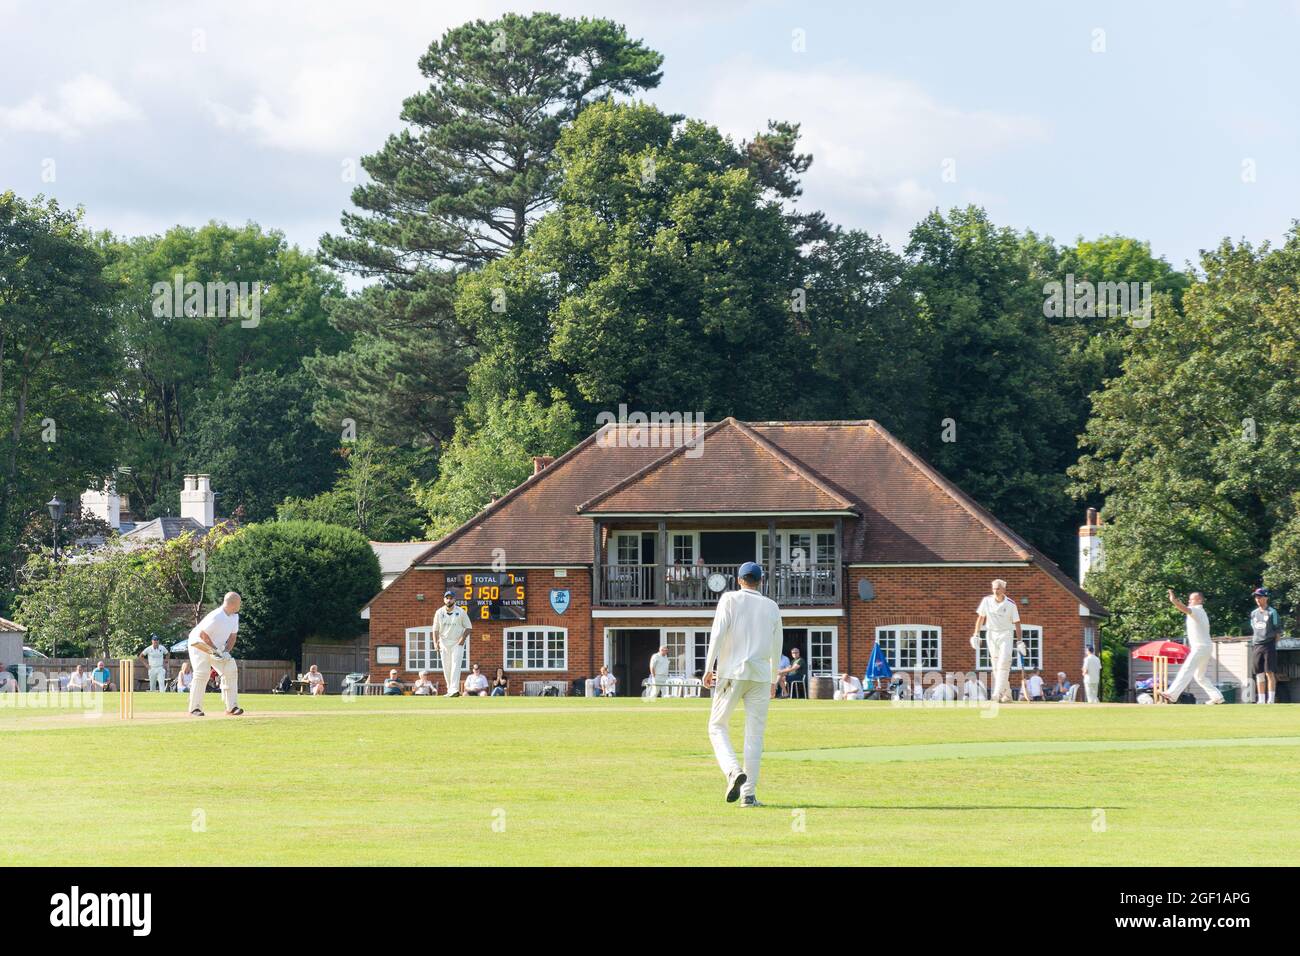 Local cricket match and Pavilion, Chobham Cricket Club Ground, Chobham, Surrey, England, United Kingdom Stock Photo